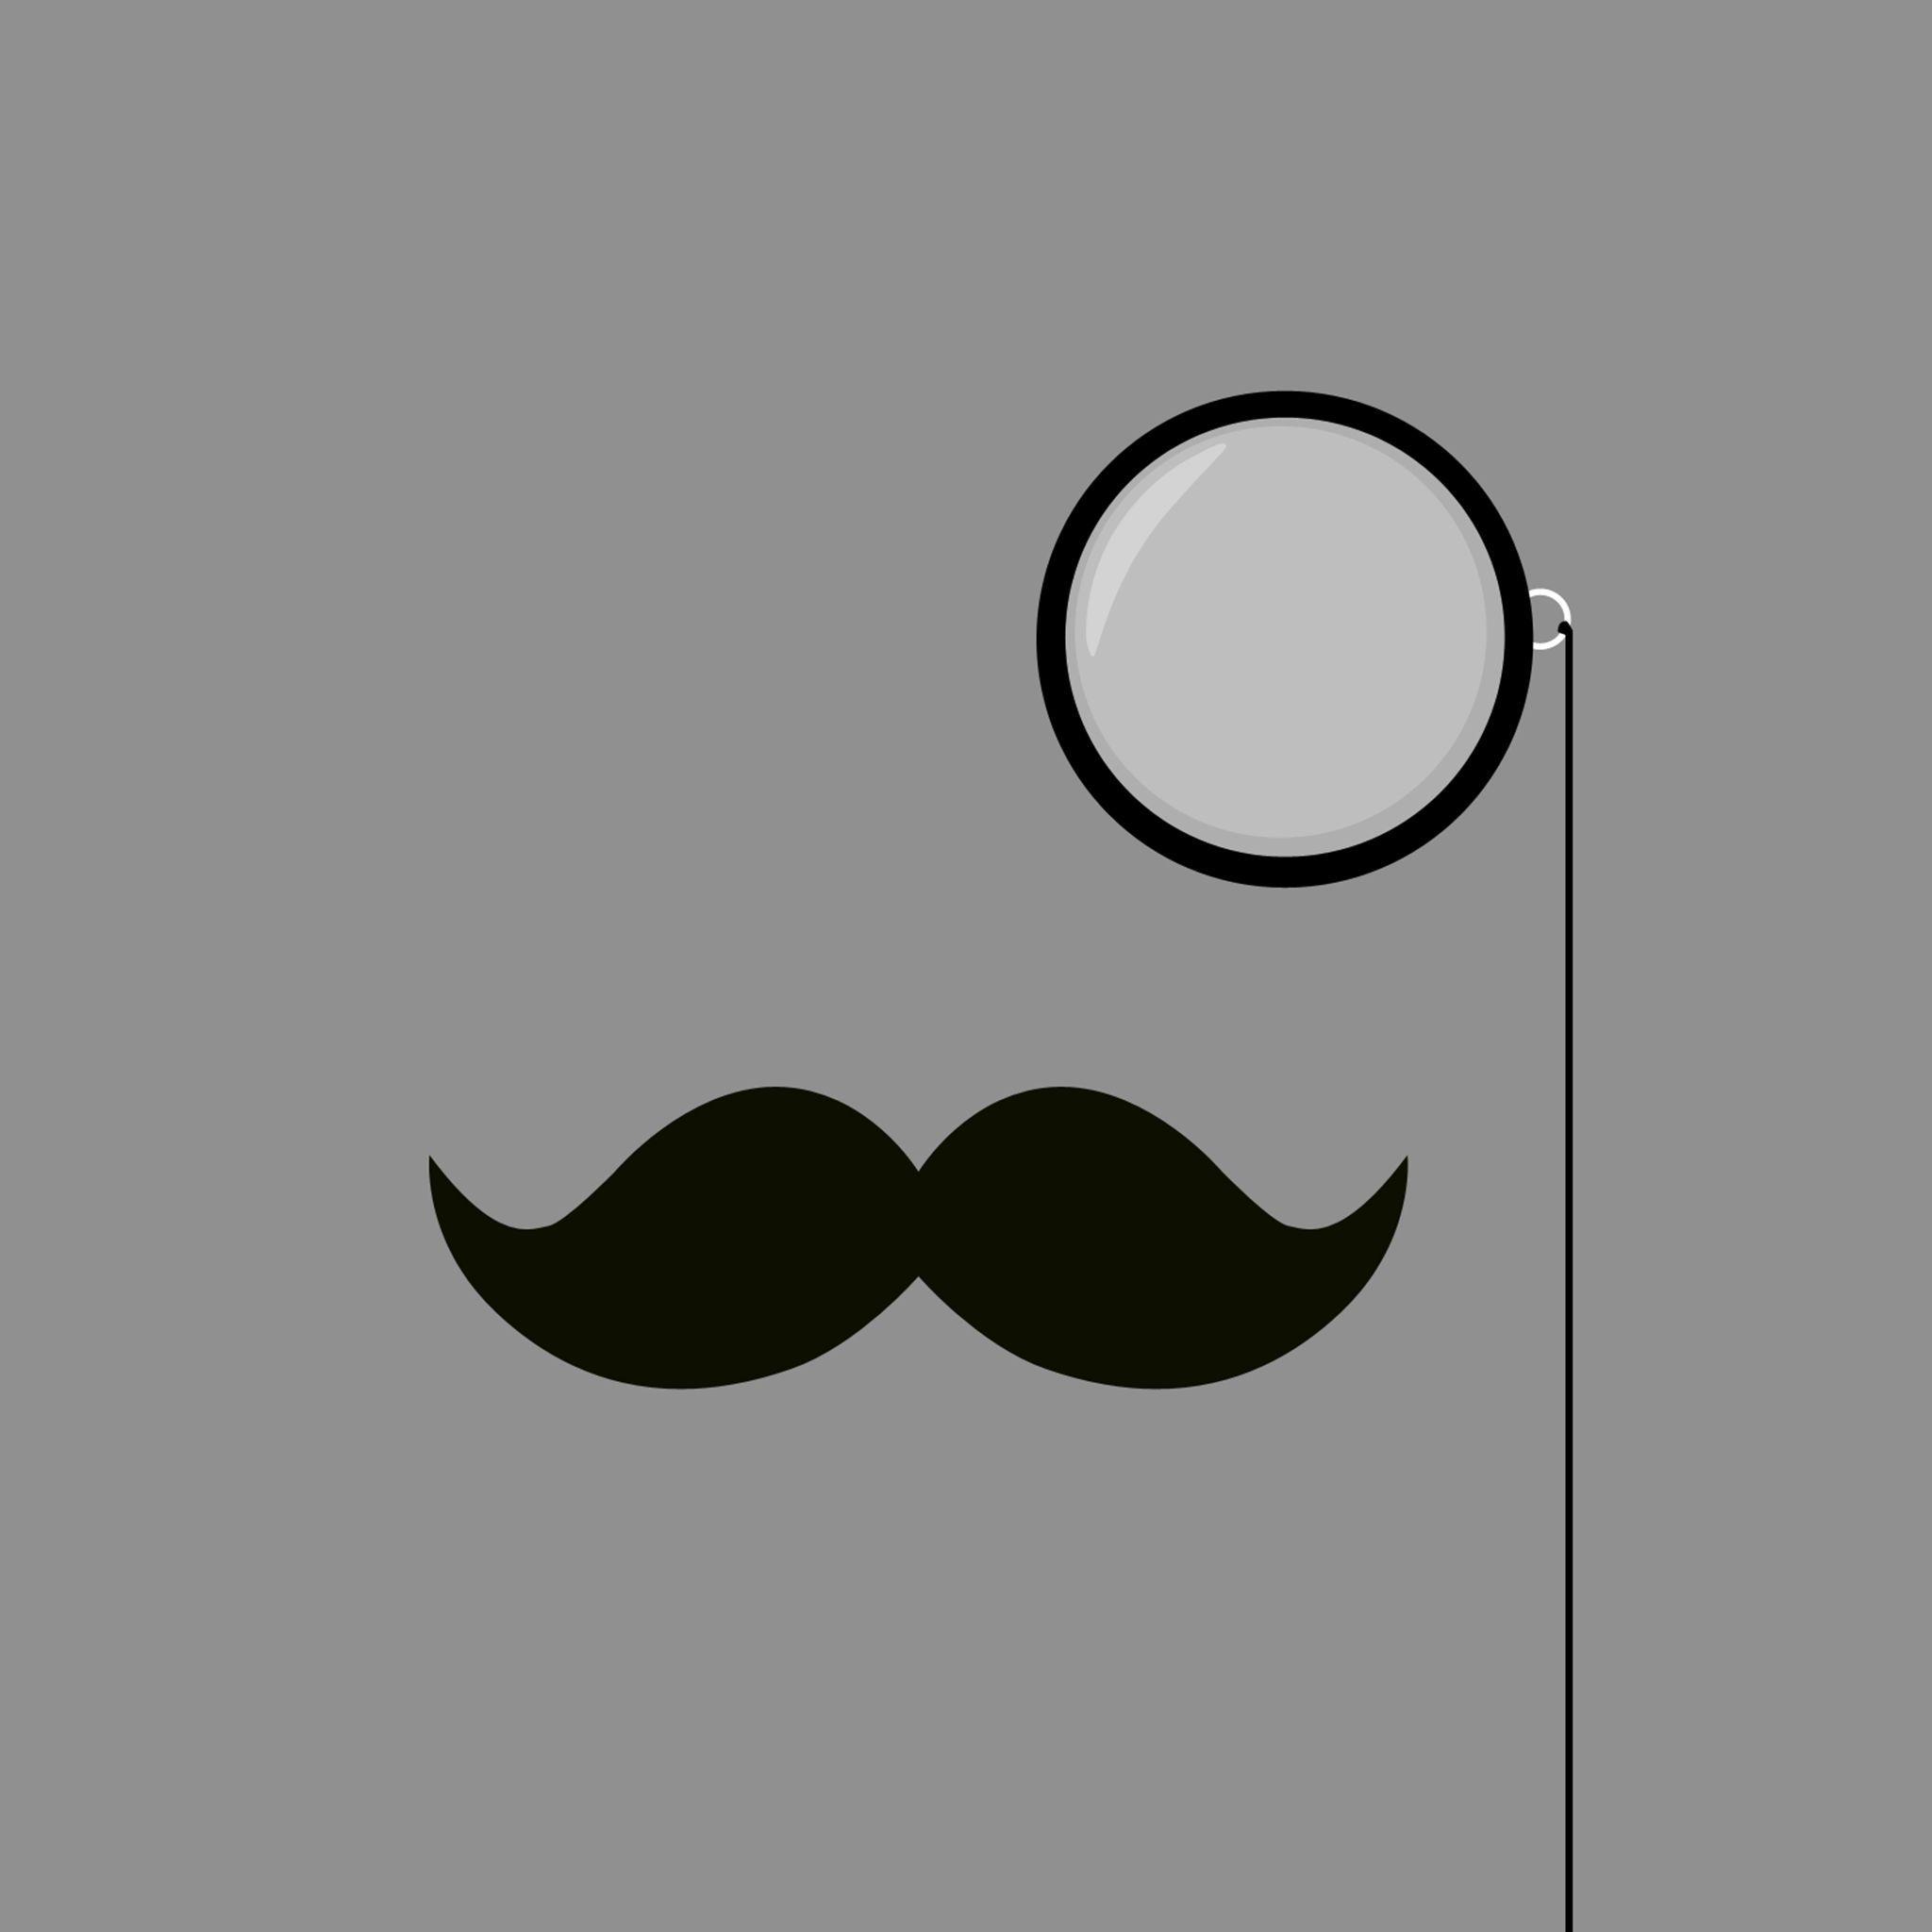 Classy Mustache and Monocle iPad Wallpaper HD #iPad #wallpaper